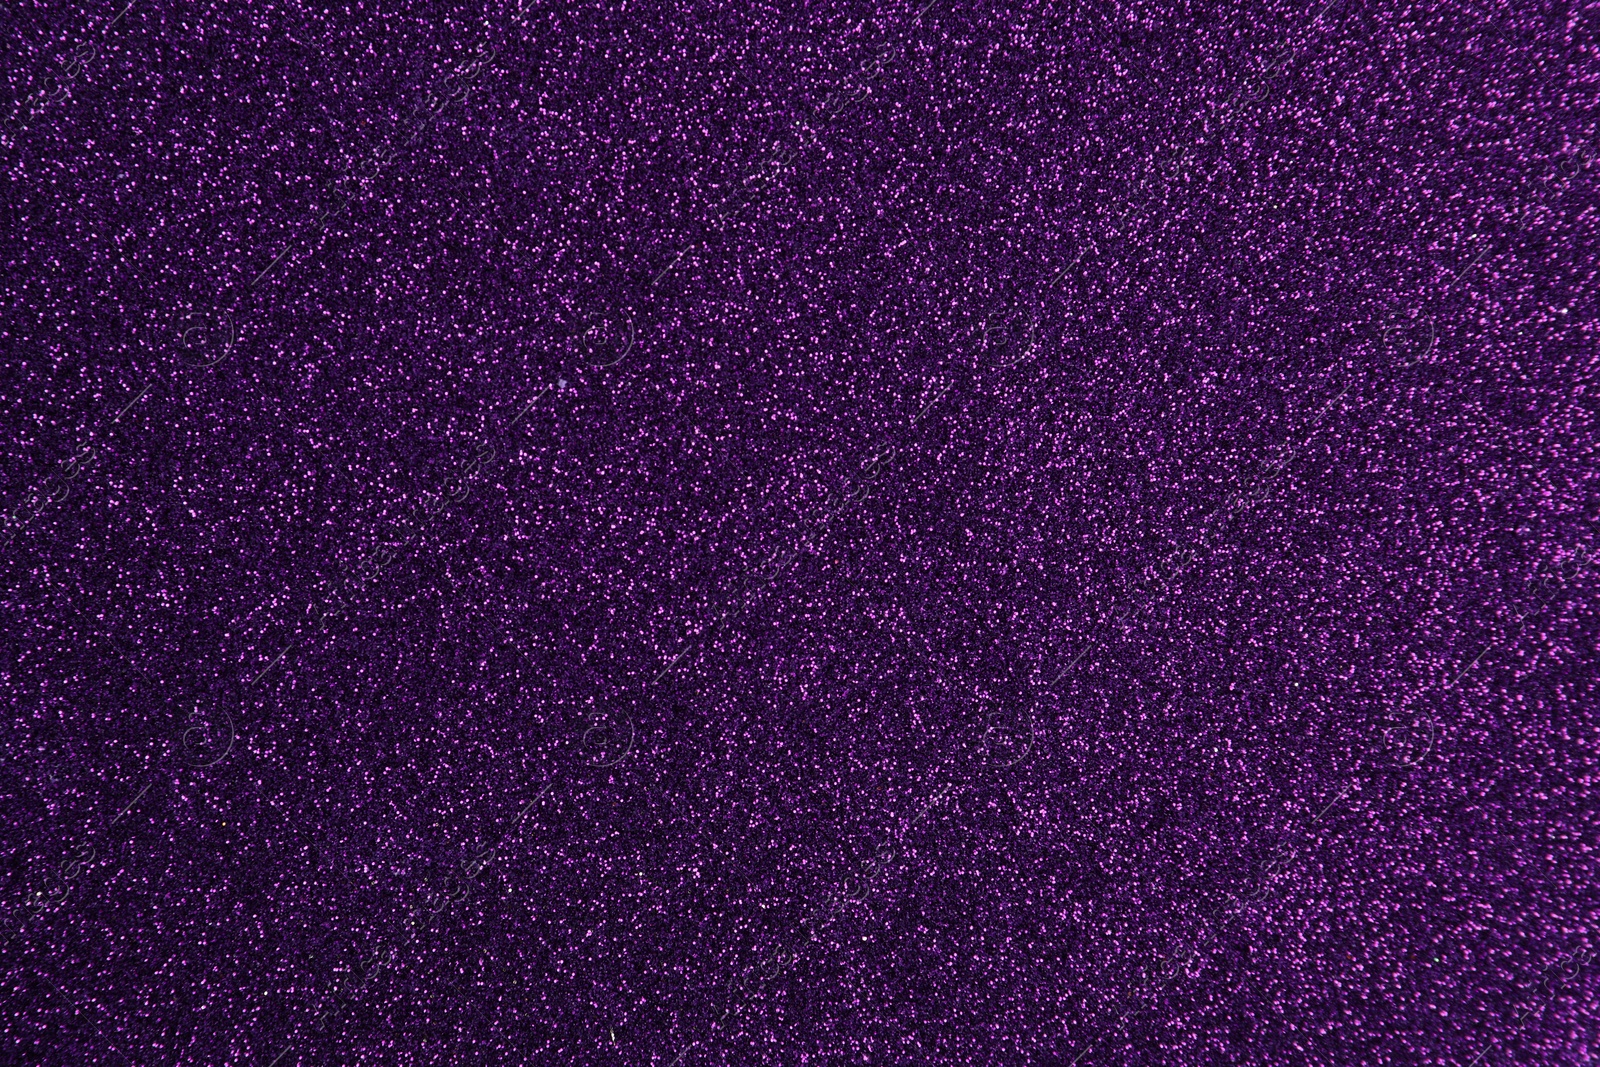 Photo of Shiny dark purple glitter as background, closeup